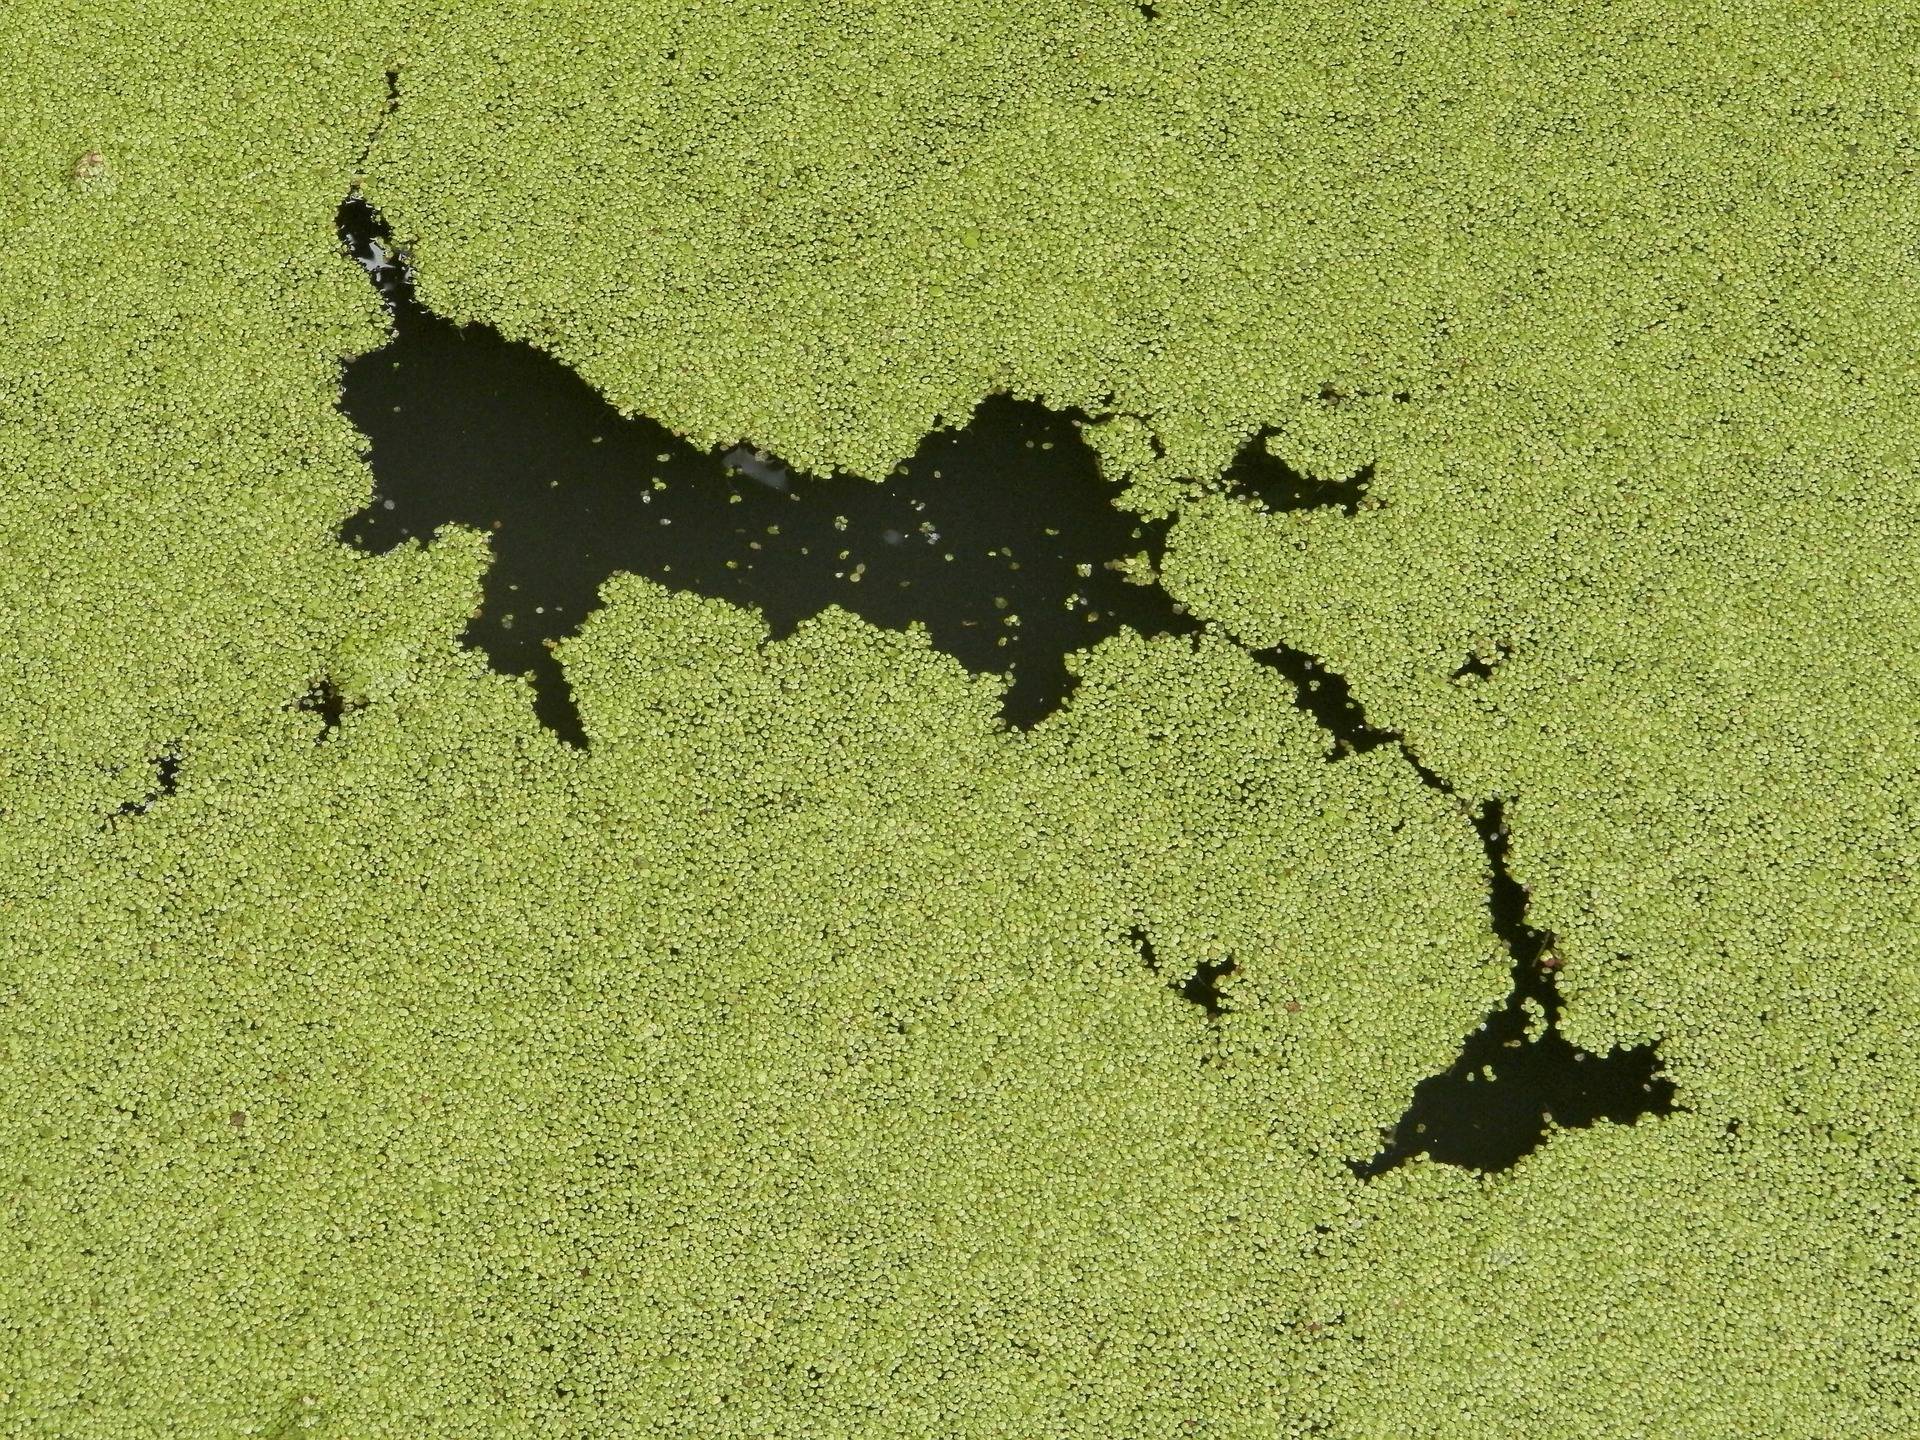 Effects of algae bloom on drinking water